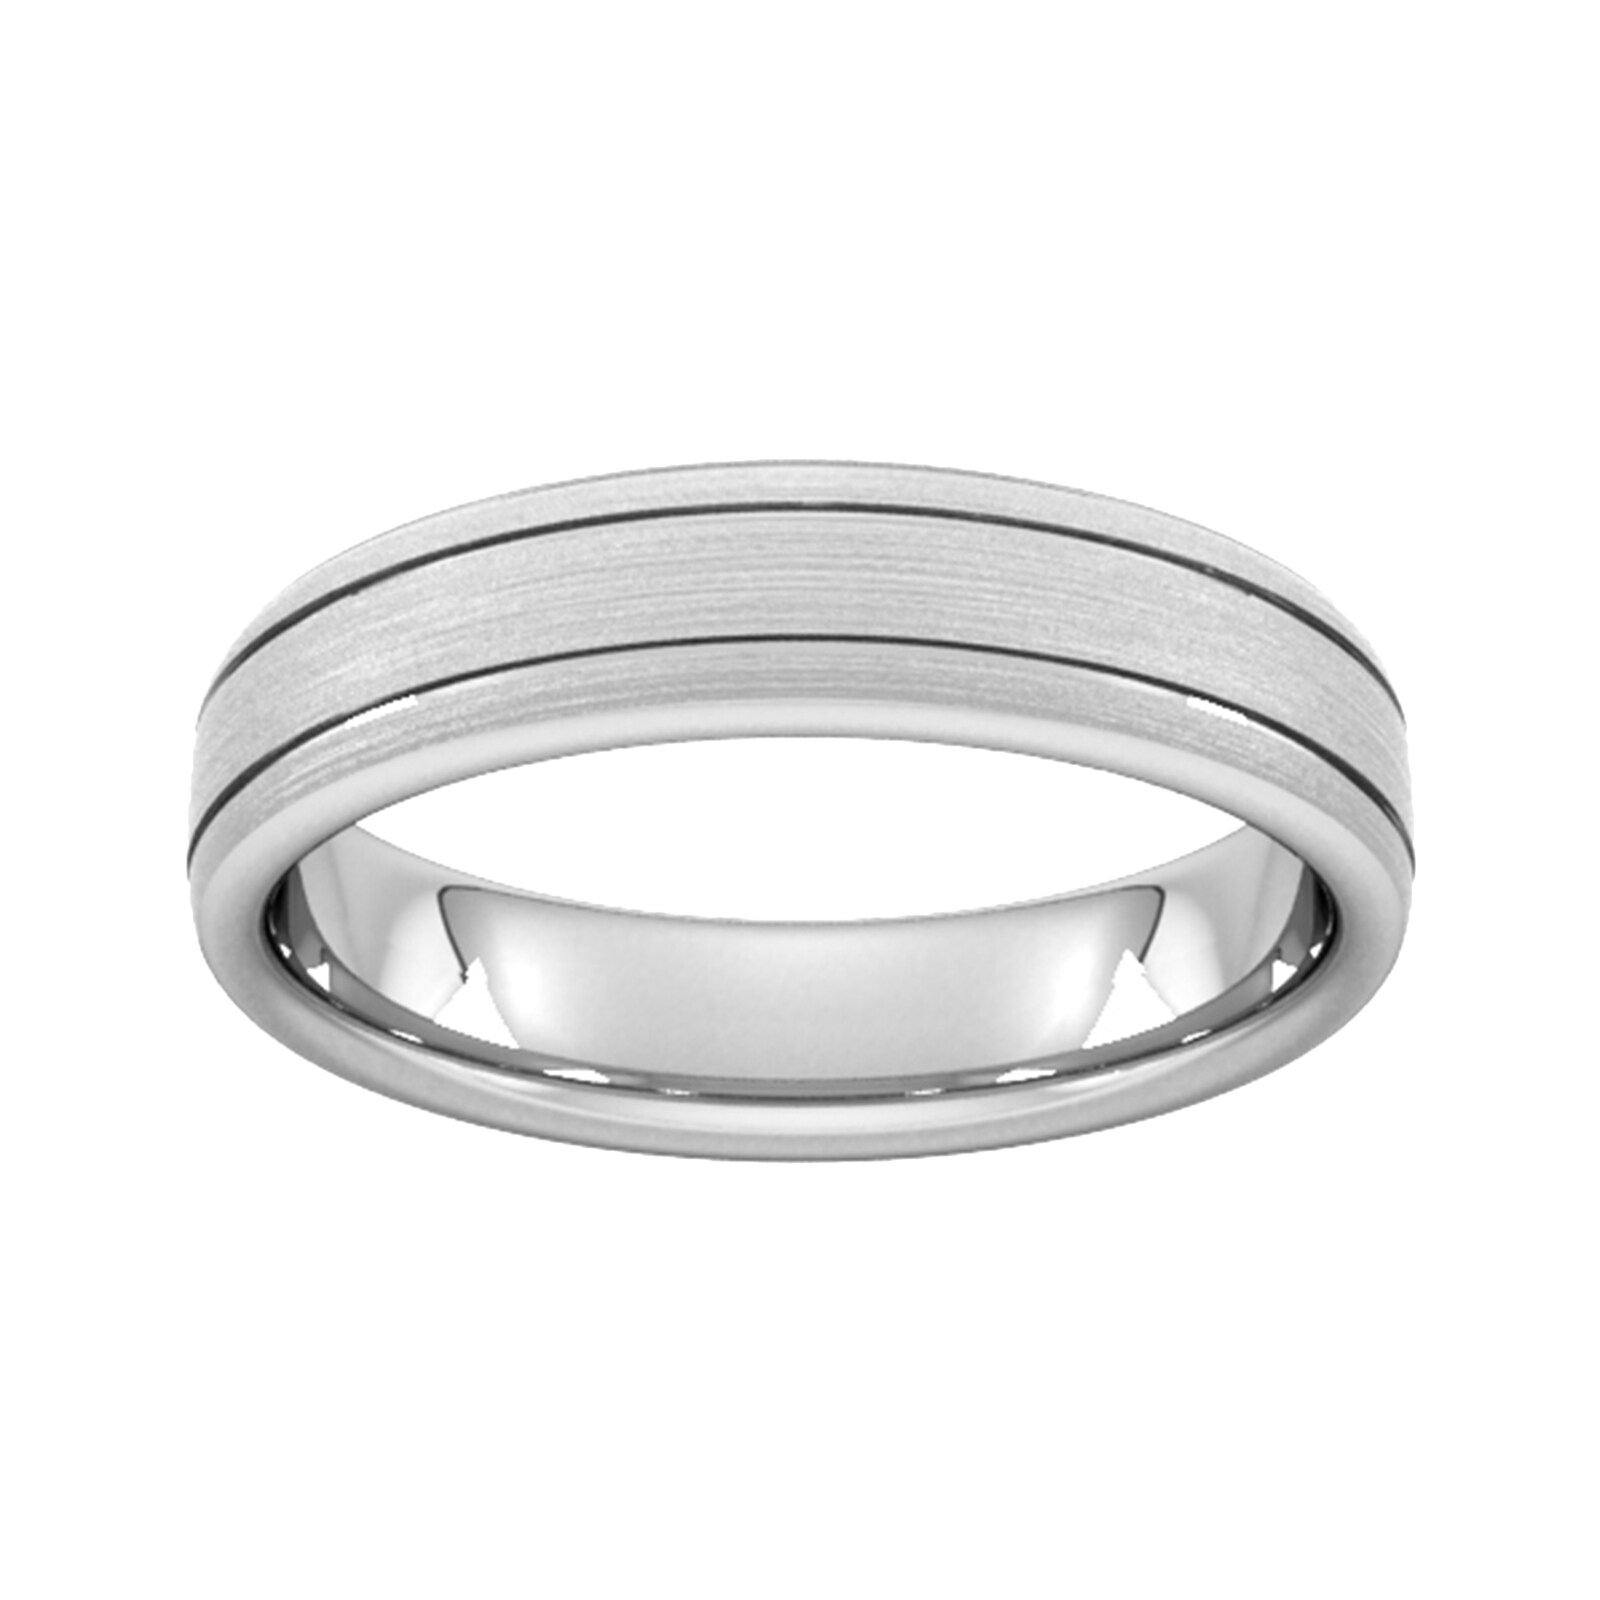 5mm Slight Court Standard Matt Finish With Double Grooves Wedding Ring In 950 Palladium - Ring Size W